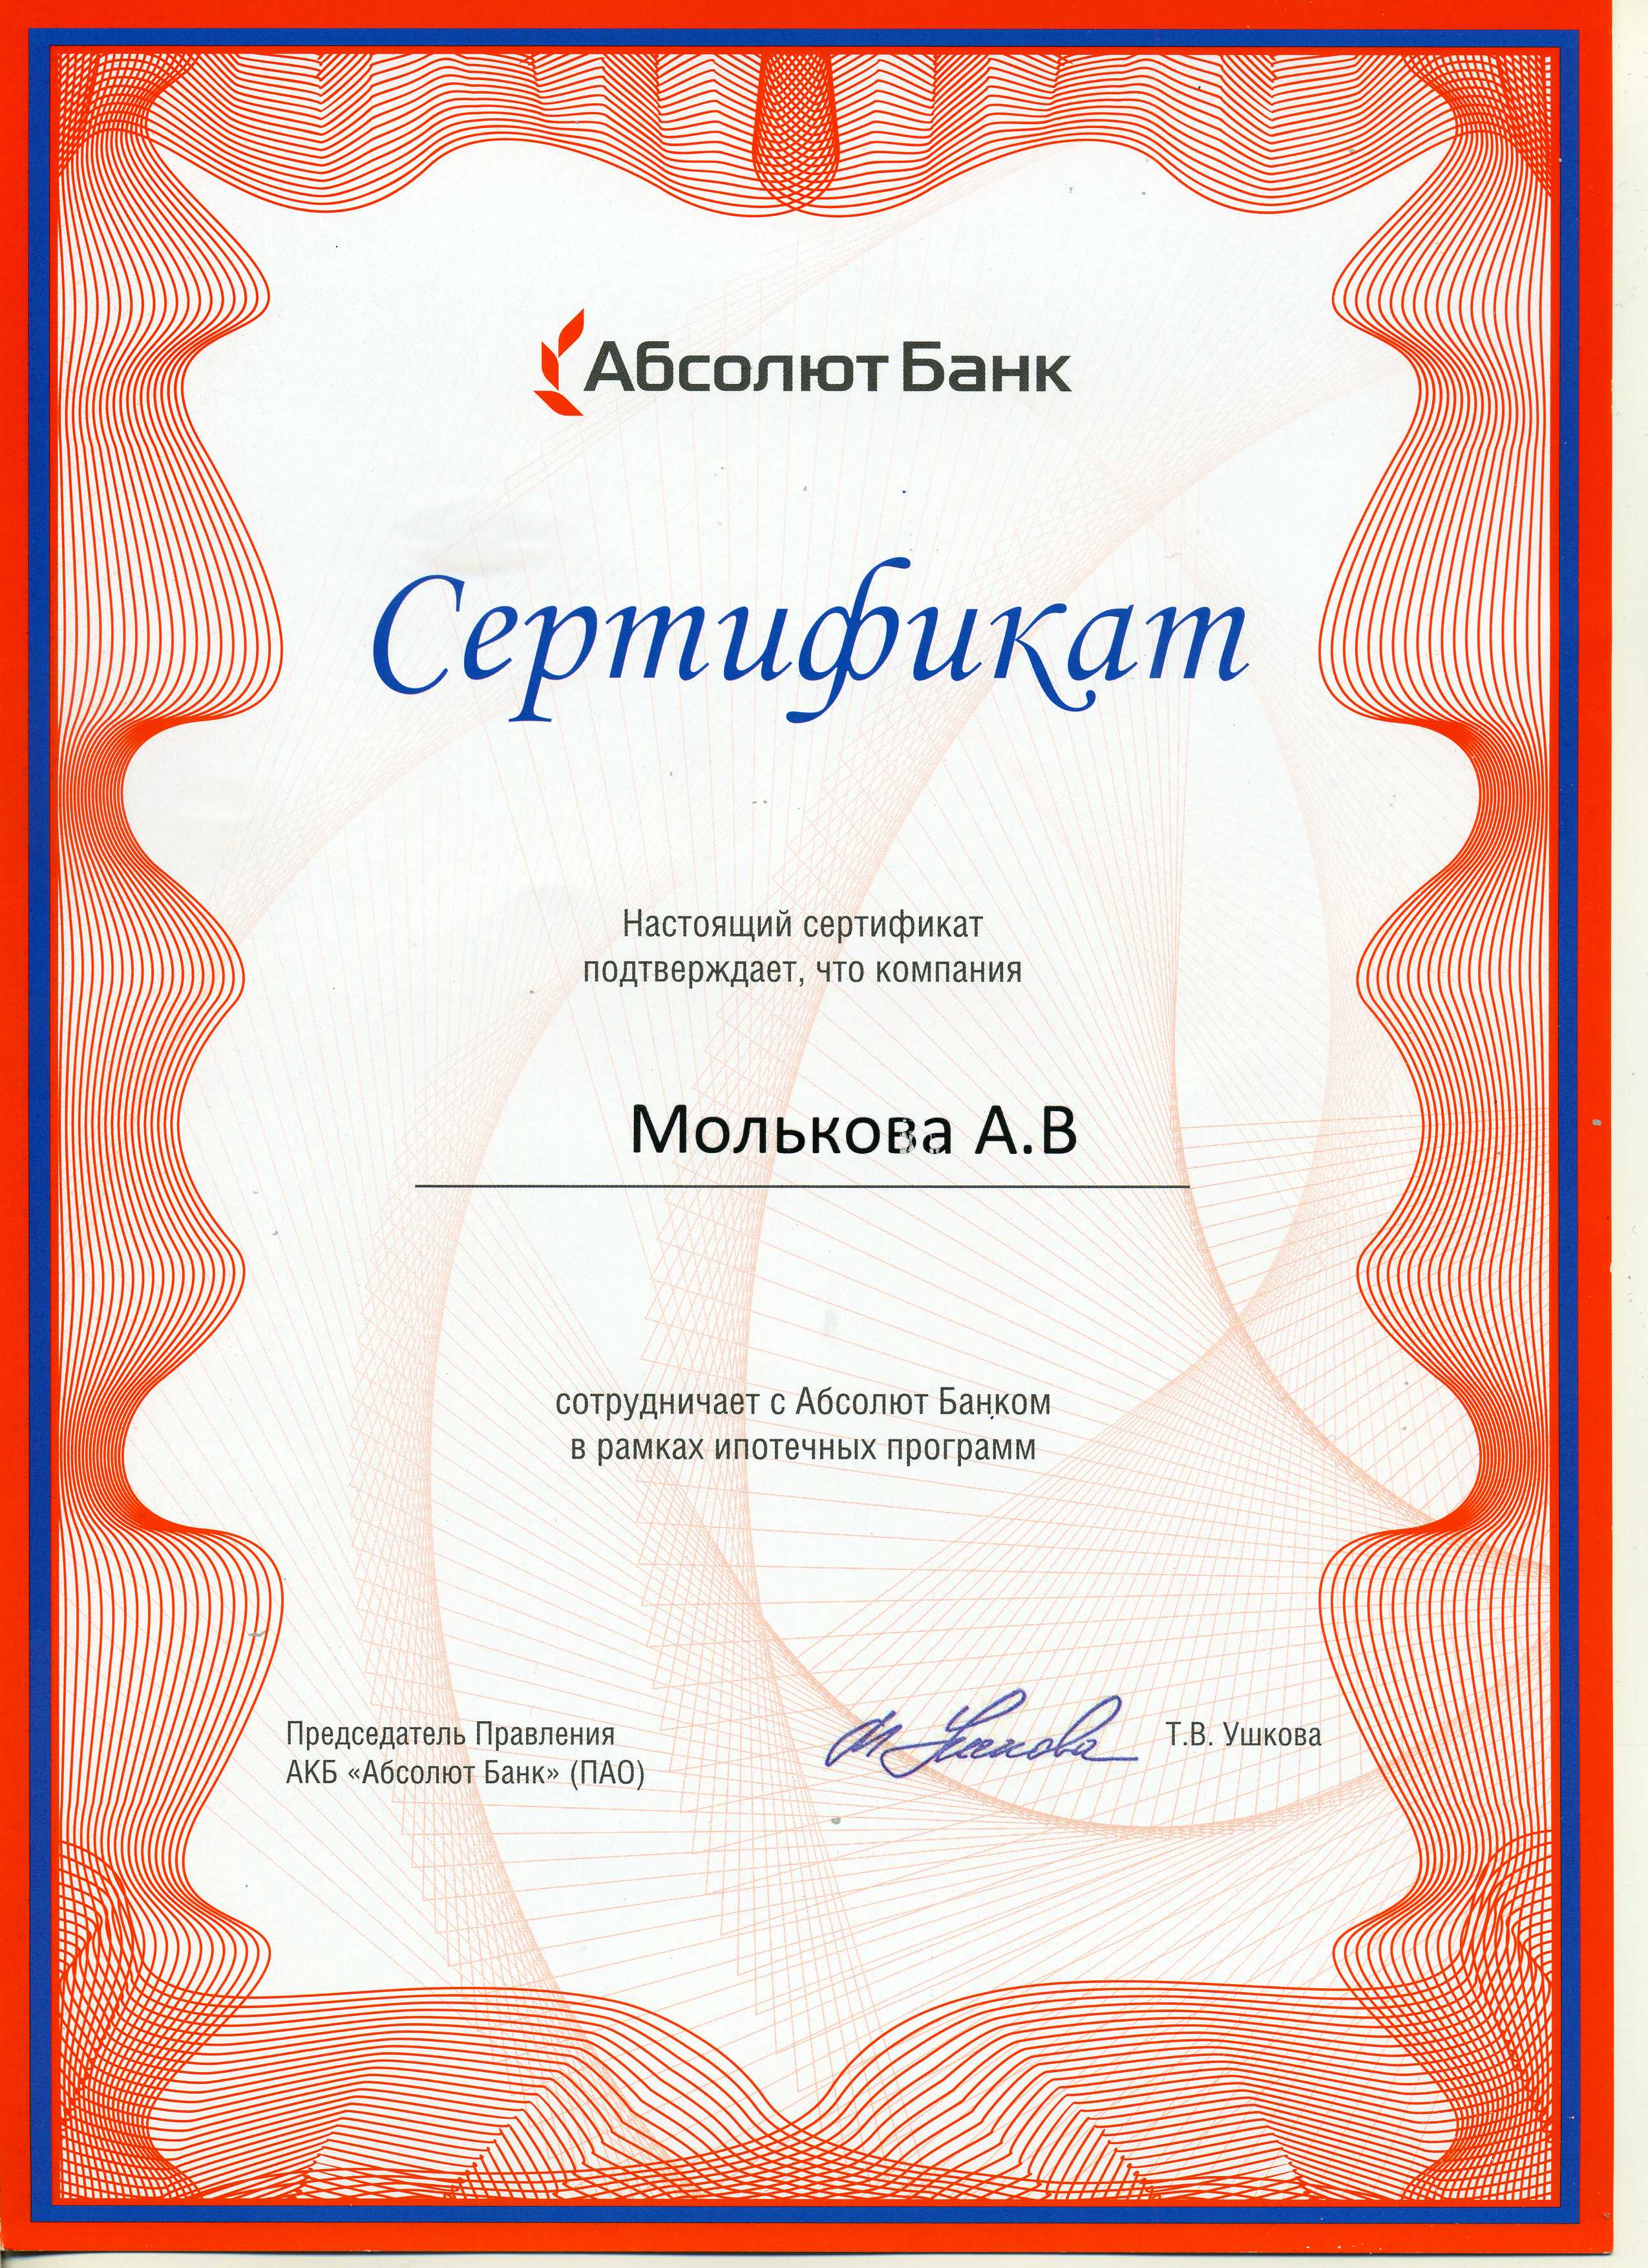 absolyutbank_sertifikat.jpg